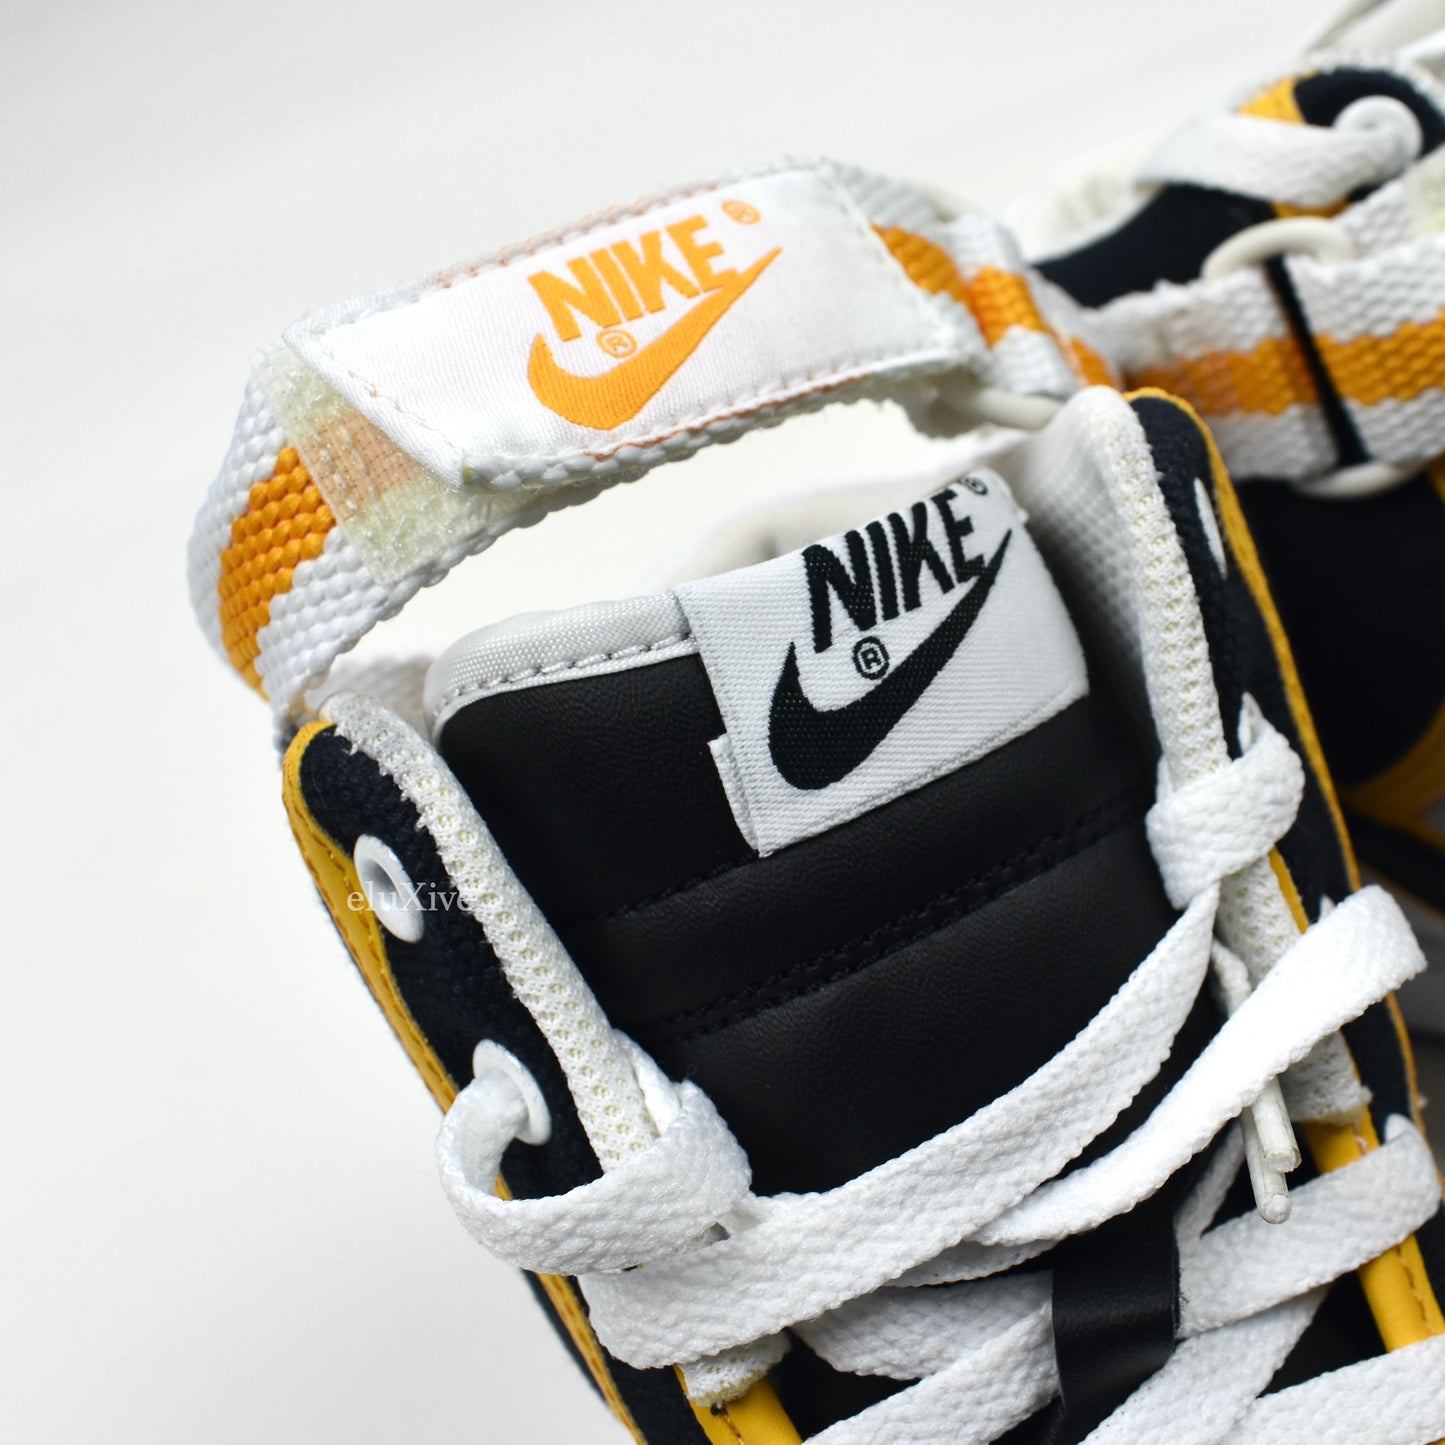 Nike - Vandal High Leather 'Pittsburgh'